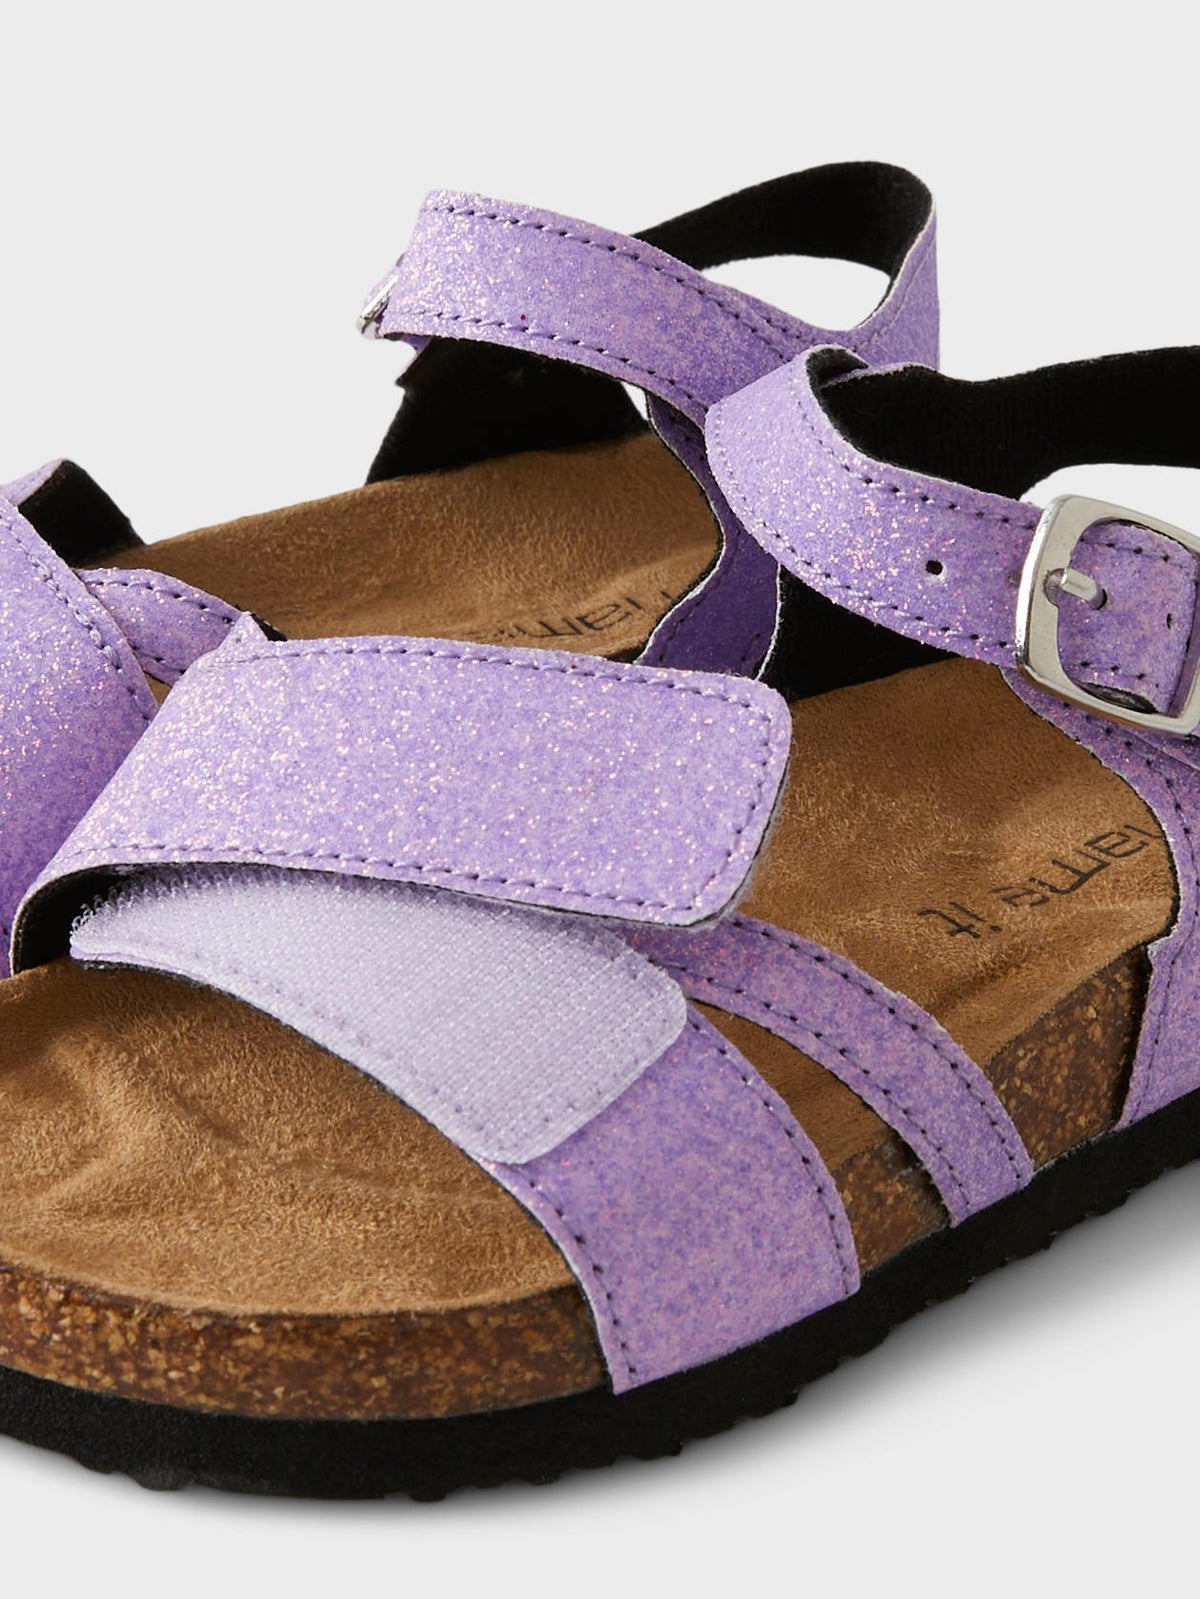 Name it sandal med glimmer - Sand verbena - sandal - MamaMilla